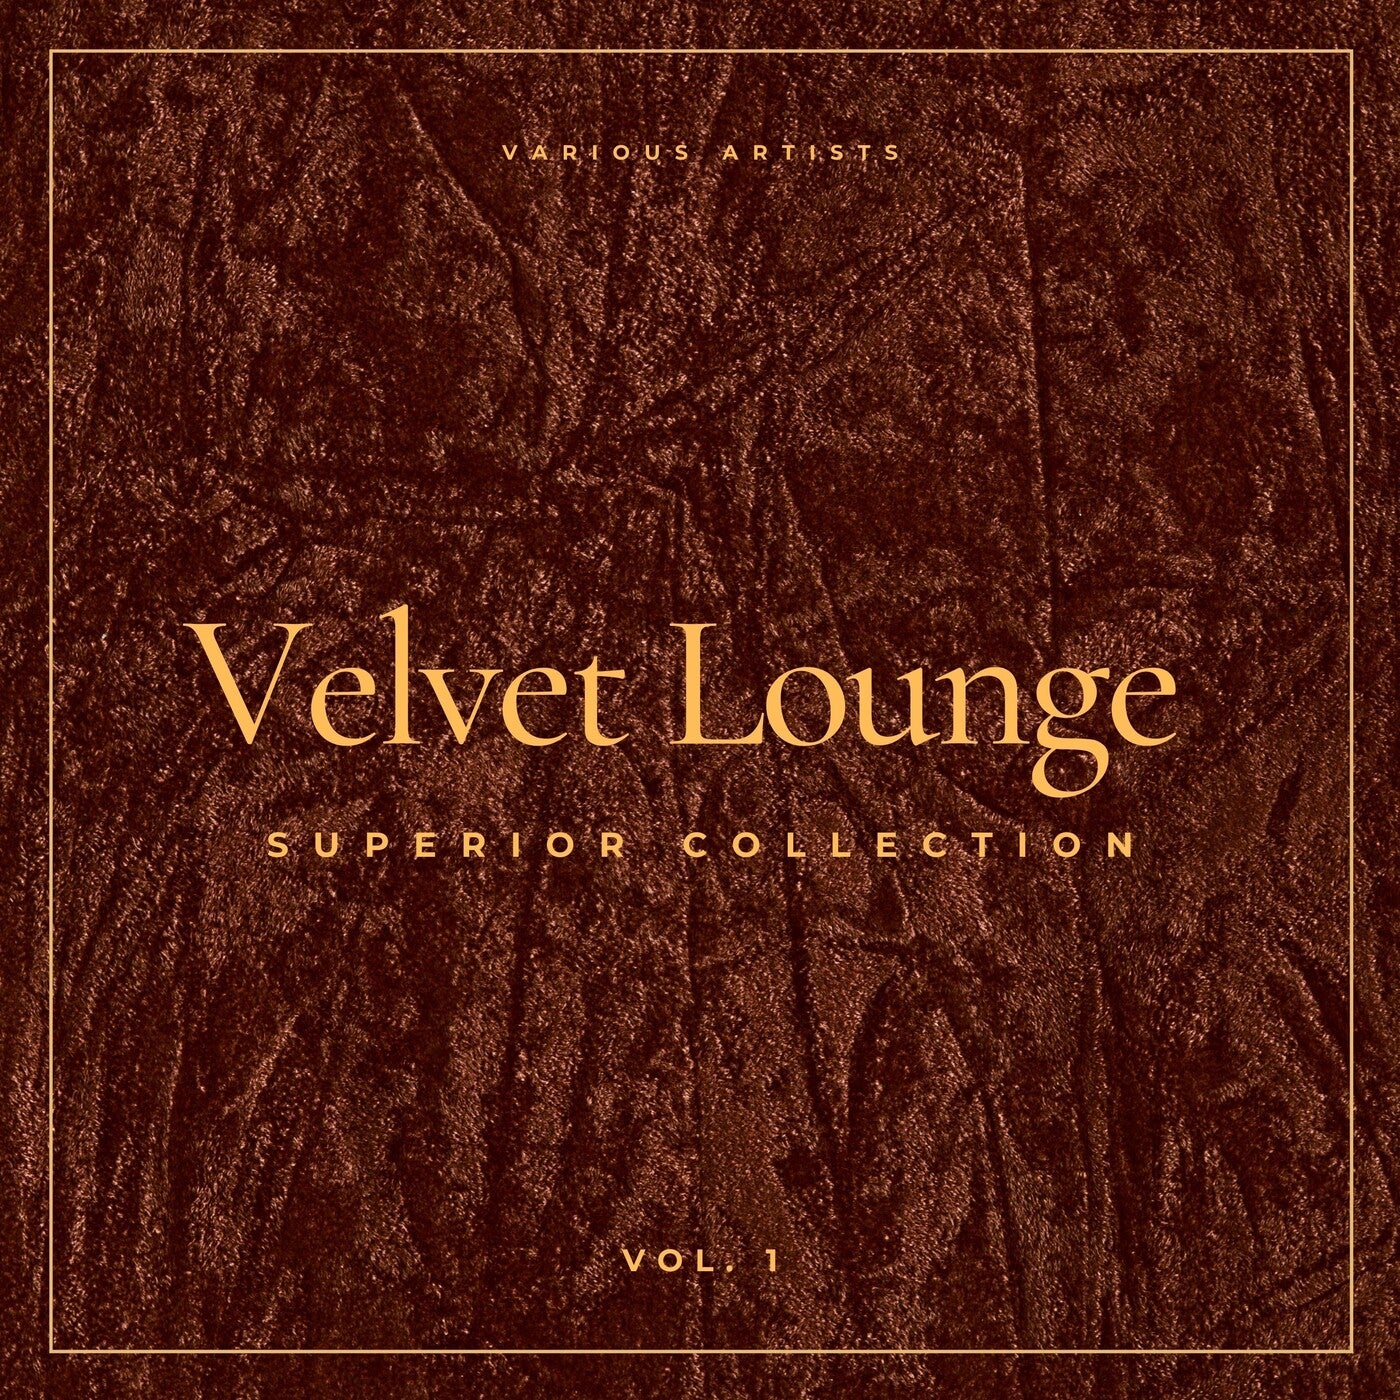 Velvet Lounge (Superior Collection), Vol. 1